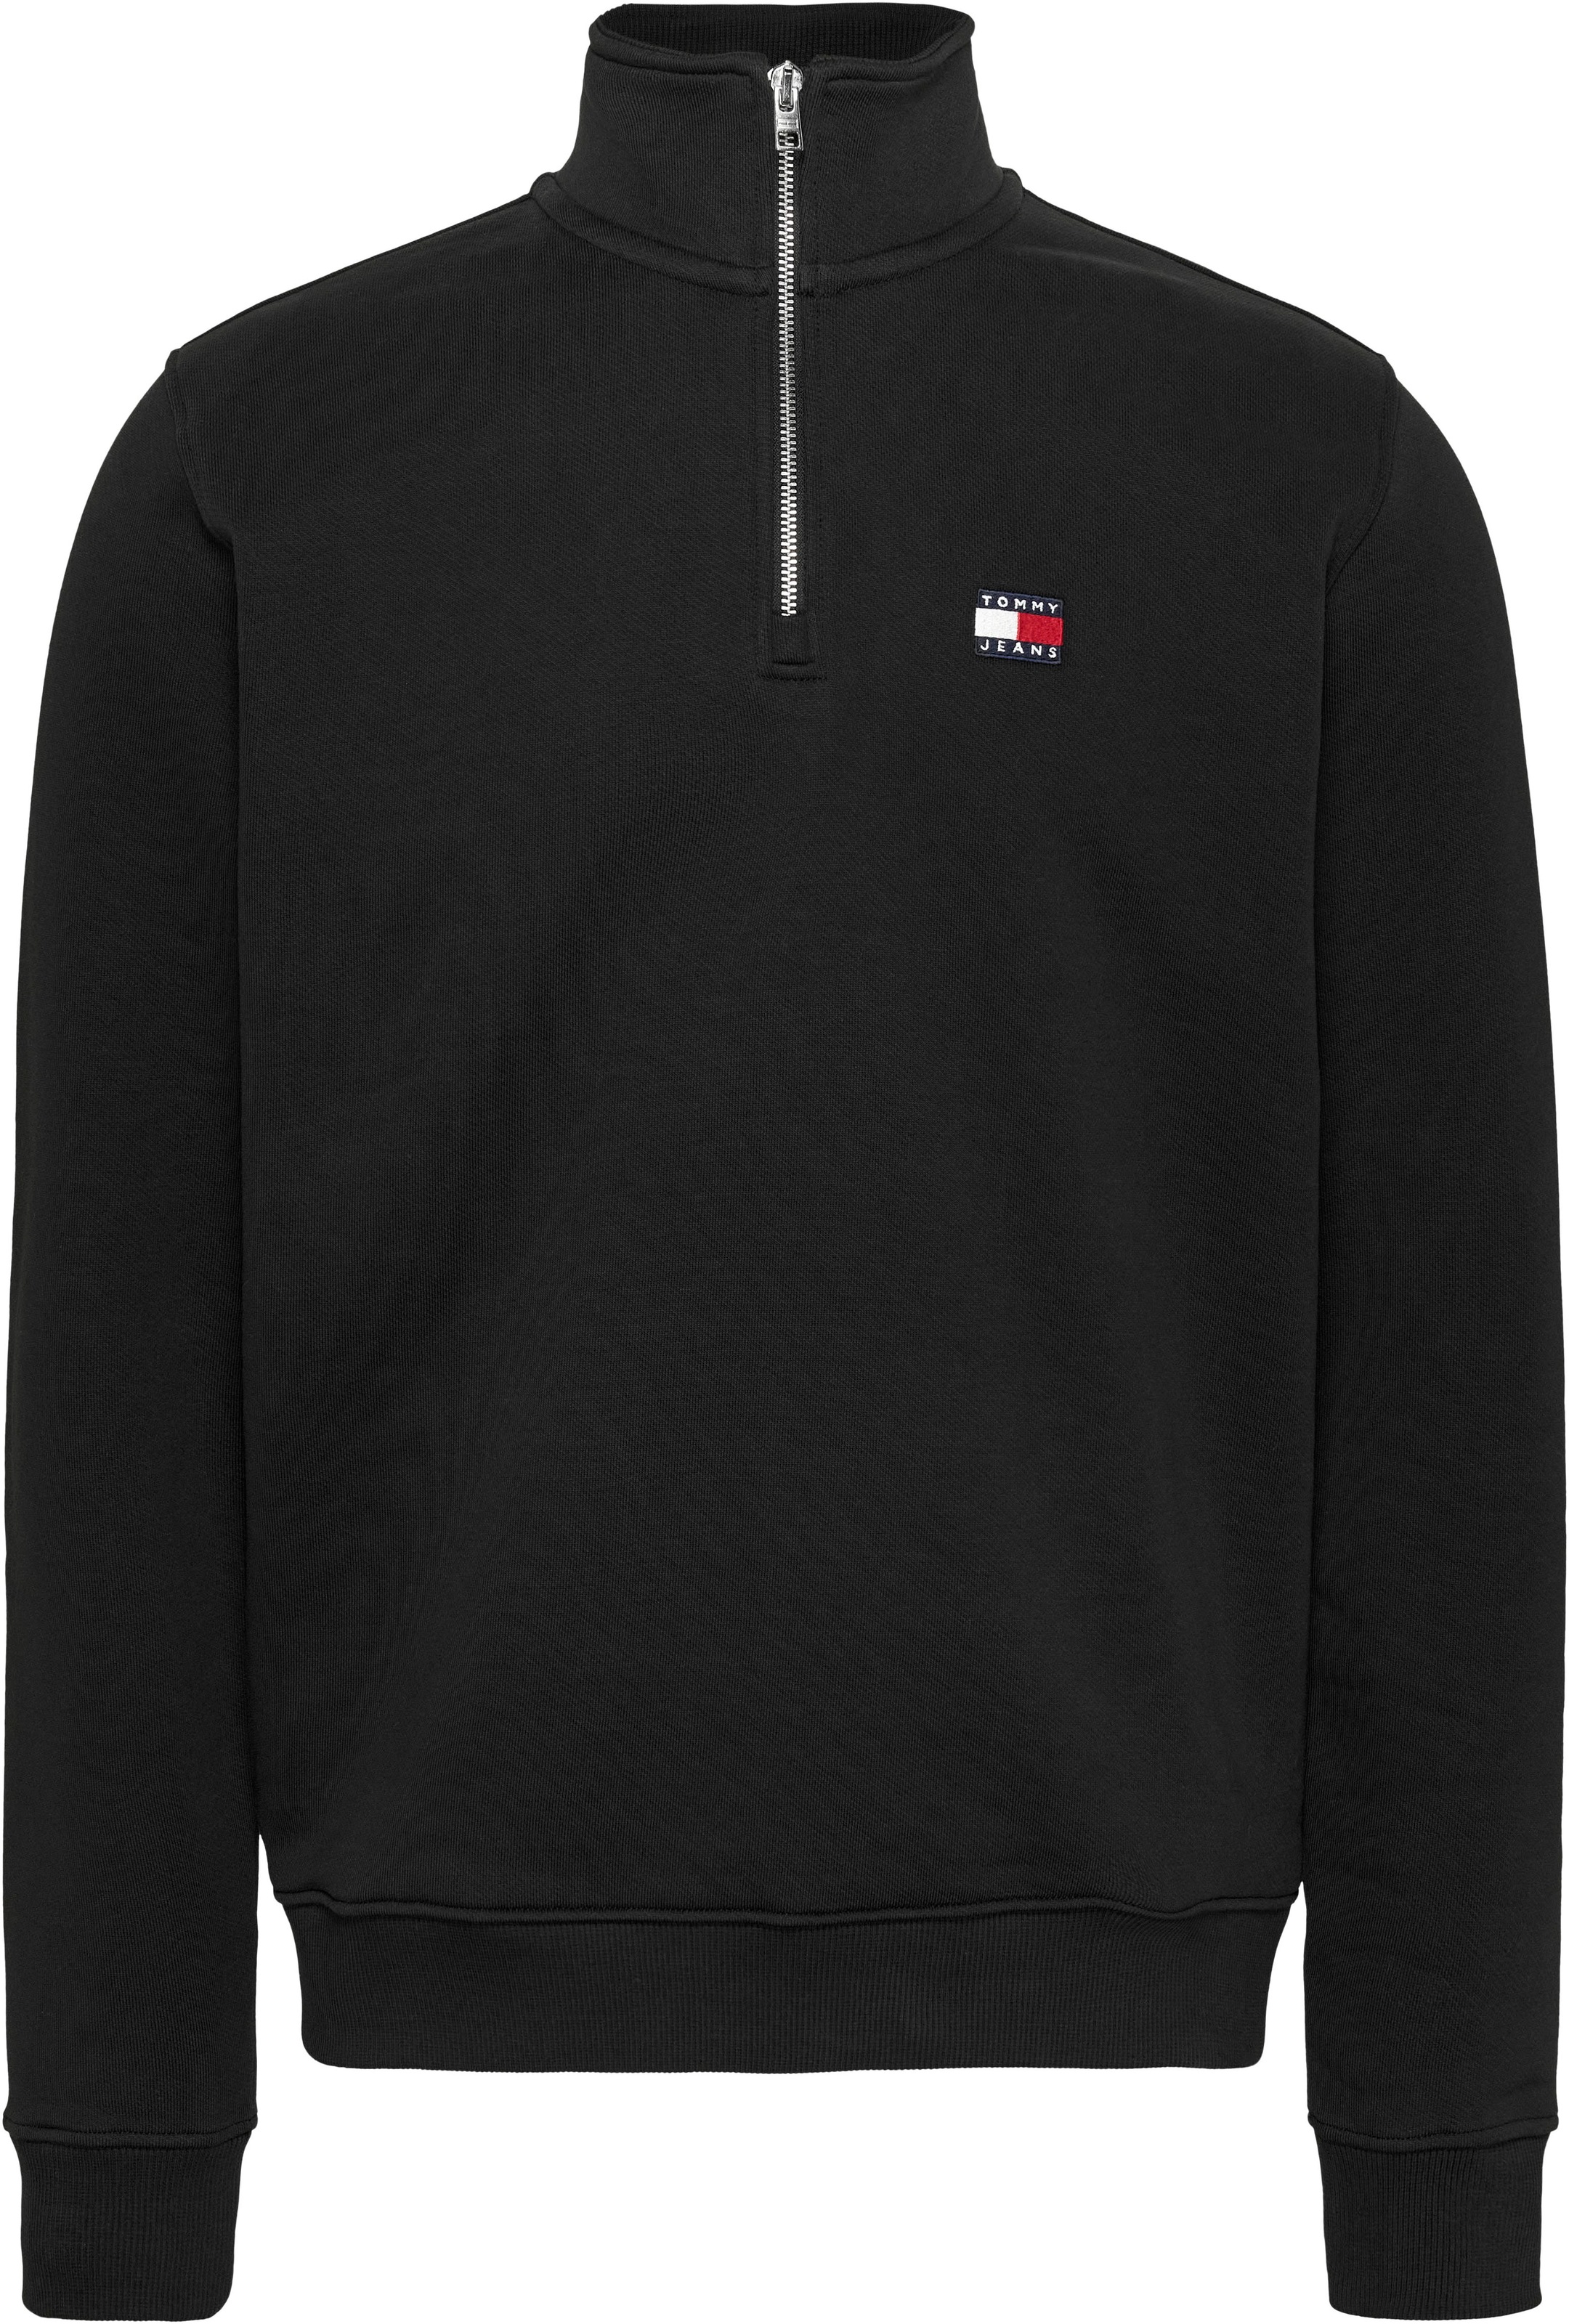 Tommy Jeans Sweatshirt »TJM REG BADGE 1/4 ZIP EXT«, mit Logoprägung